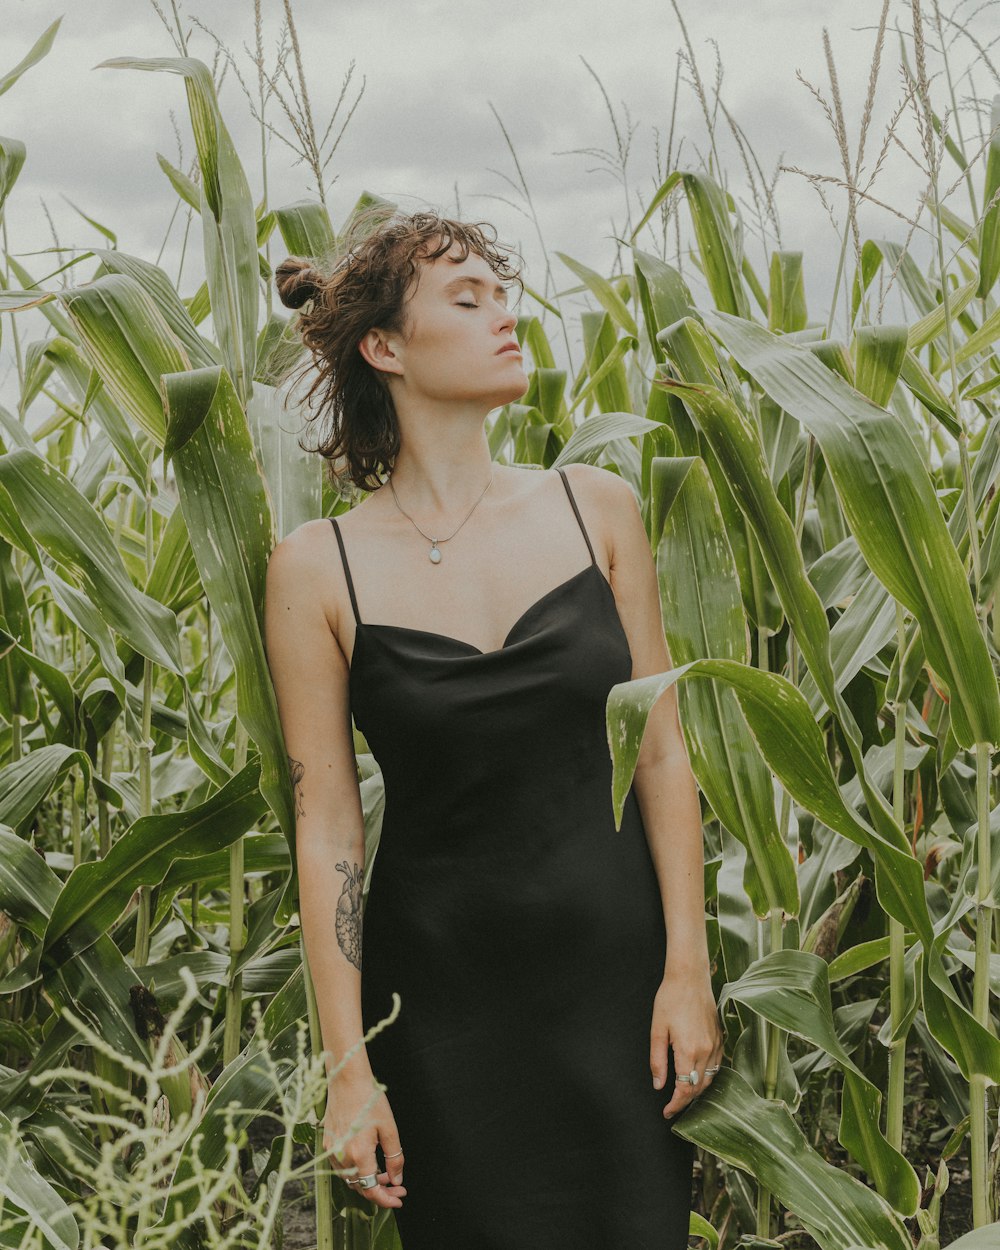 a woman in a black dress standing in a corn field